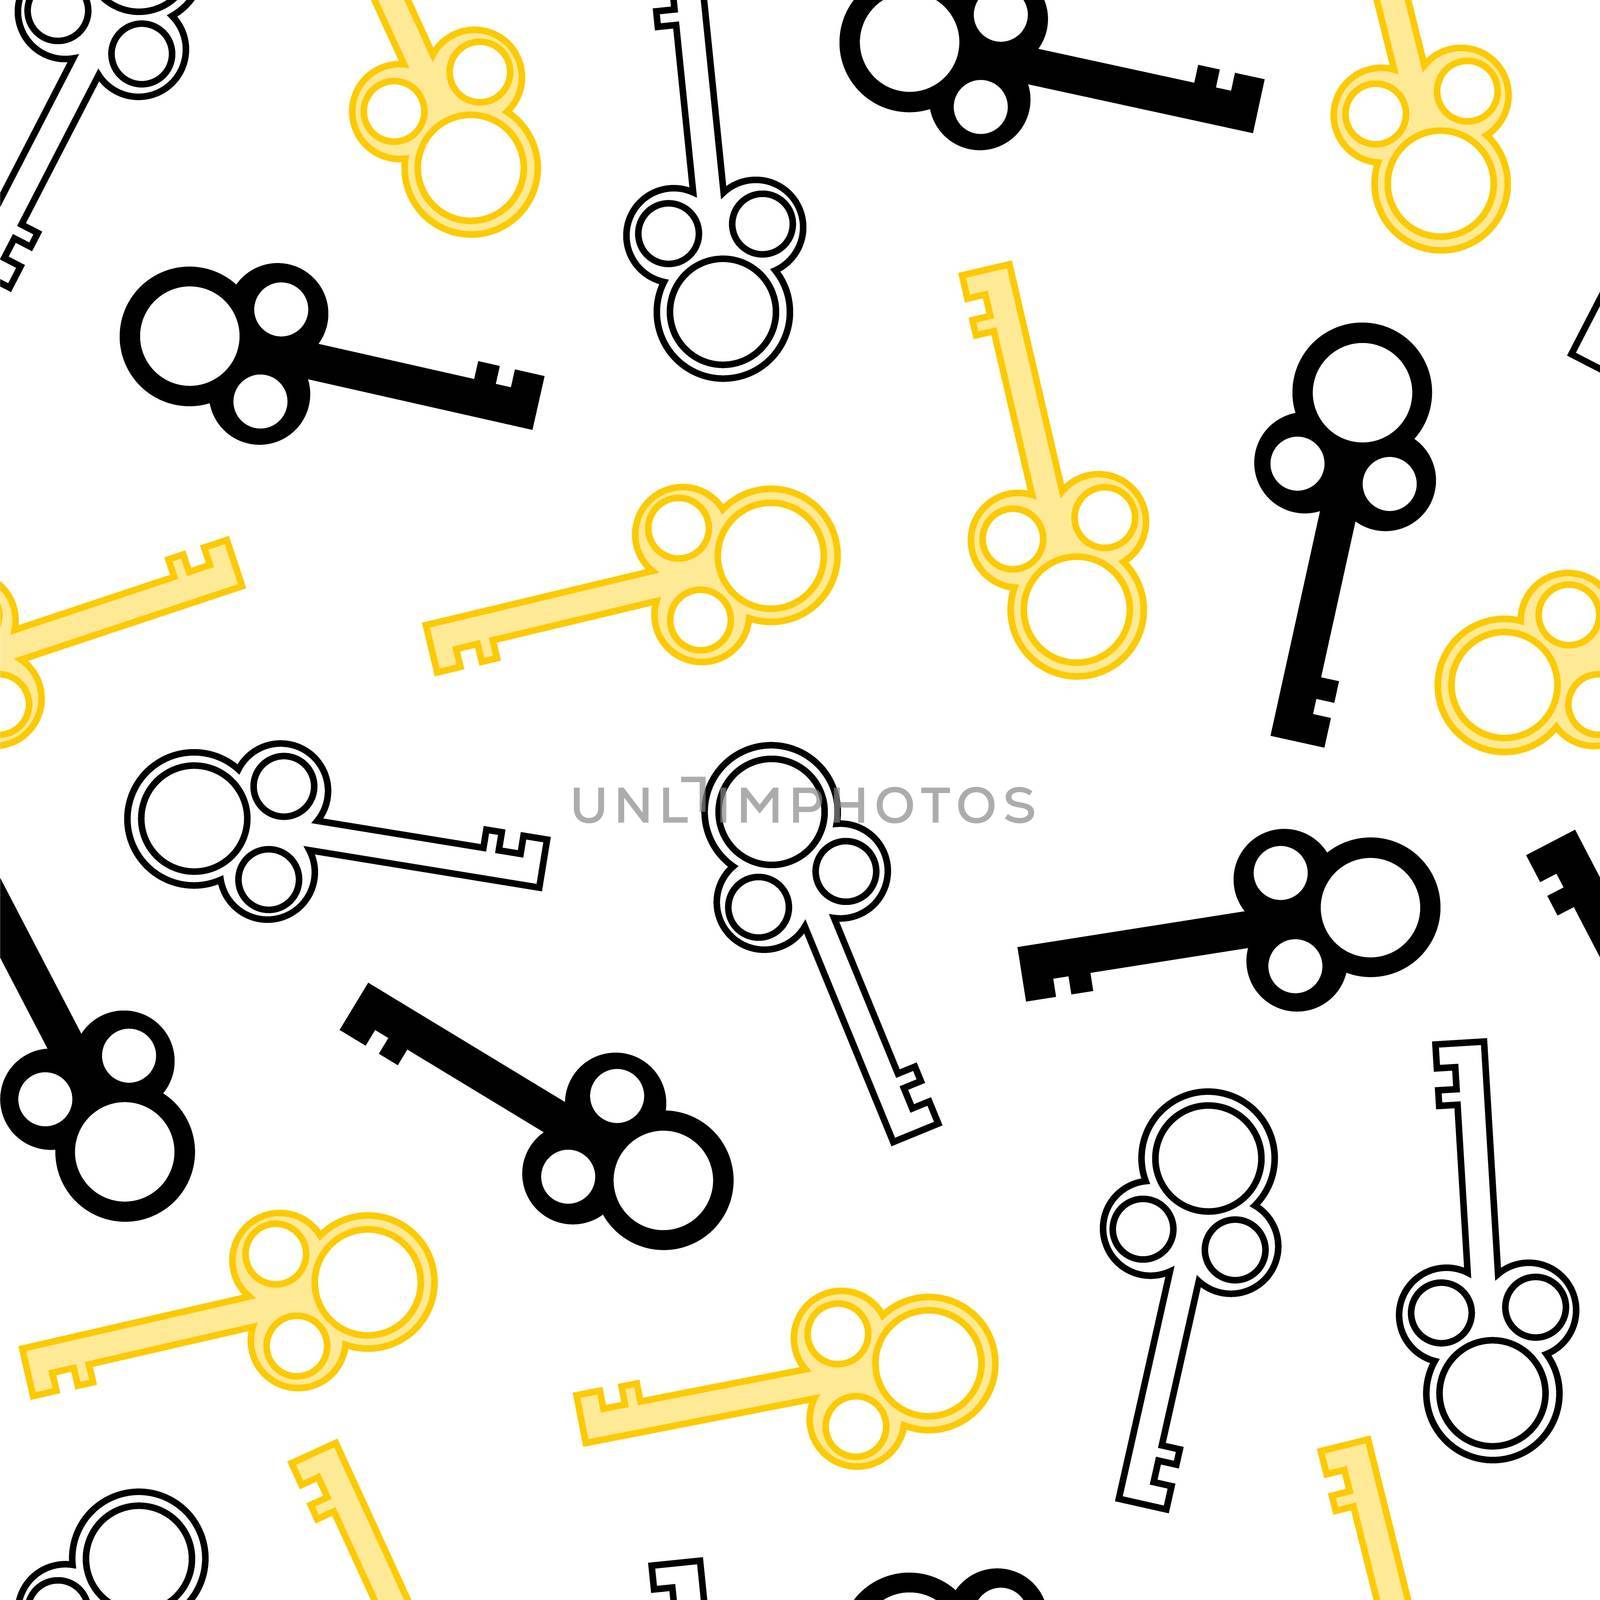 Seamless Pattern With Vintage Key. The Key to the Lock on a White Background. by Rina_Dozornaya